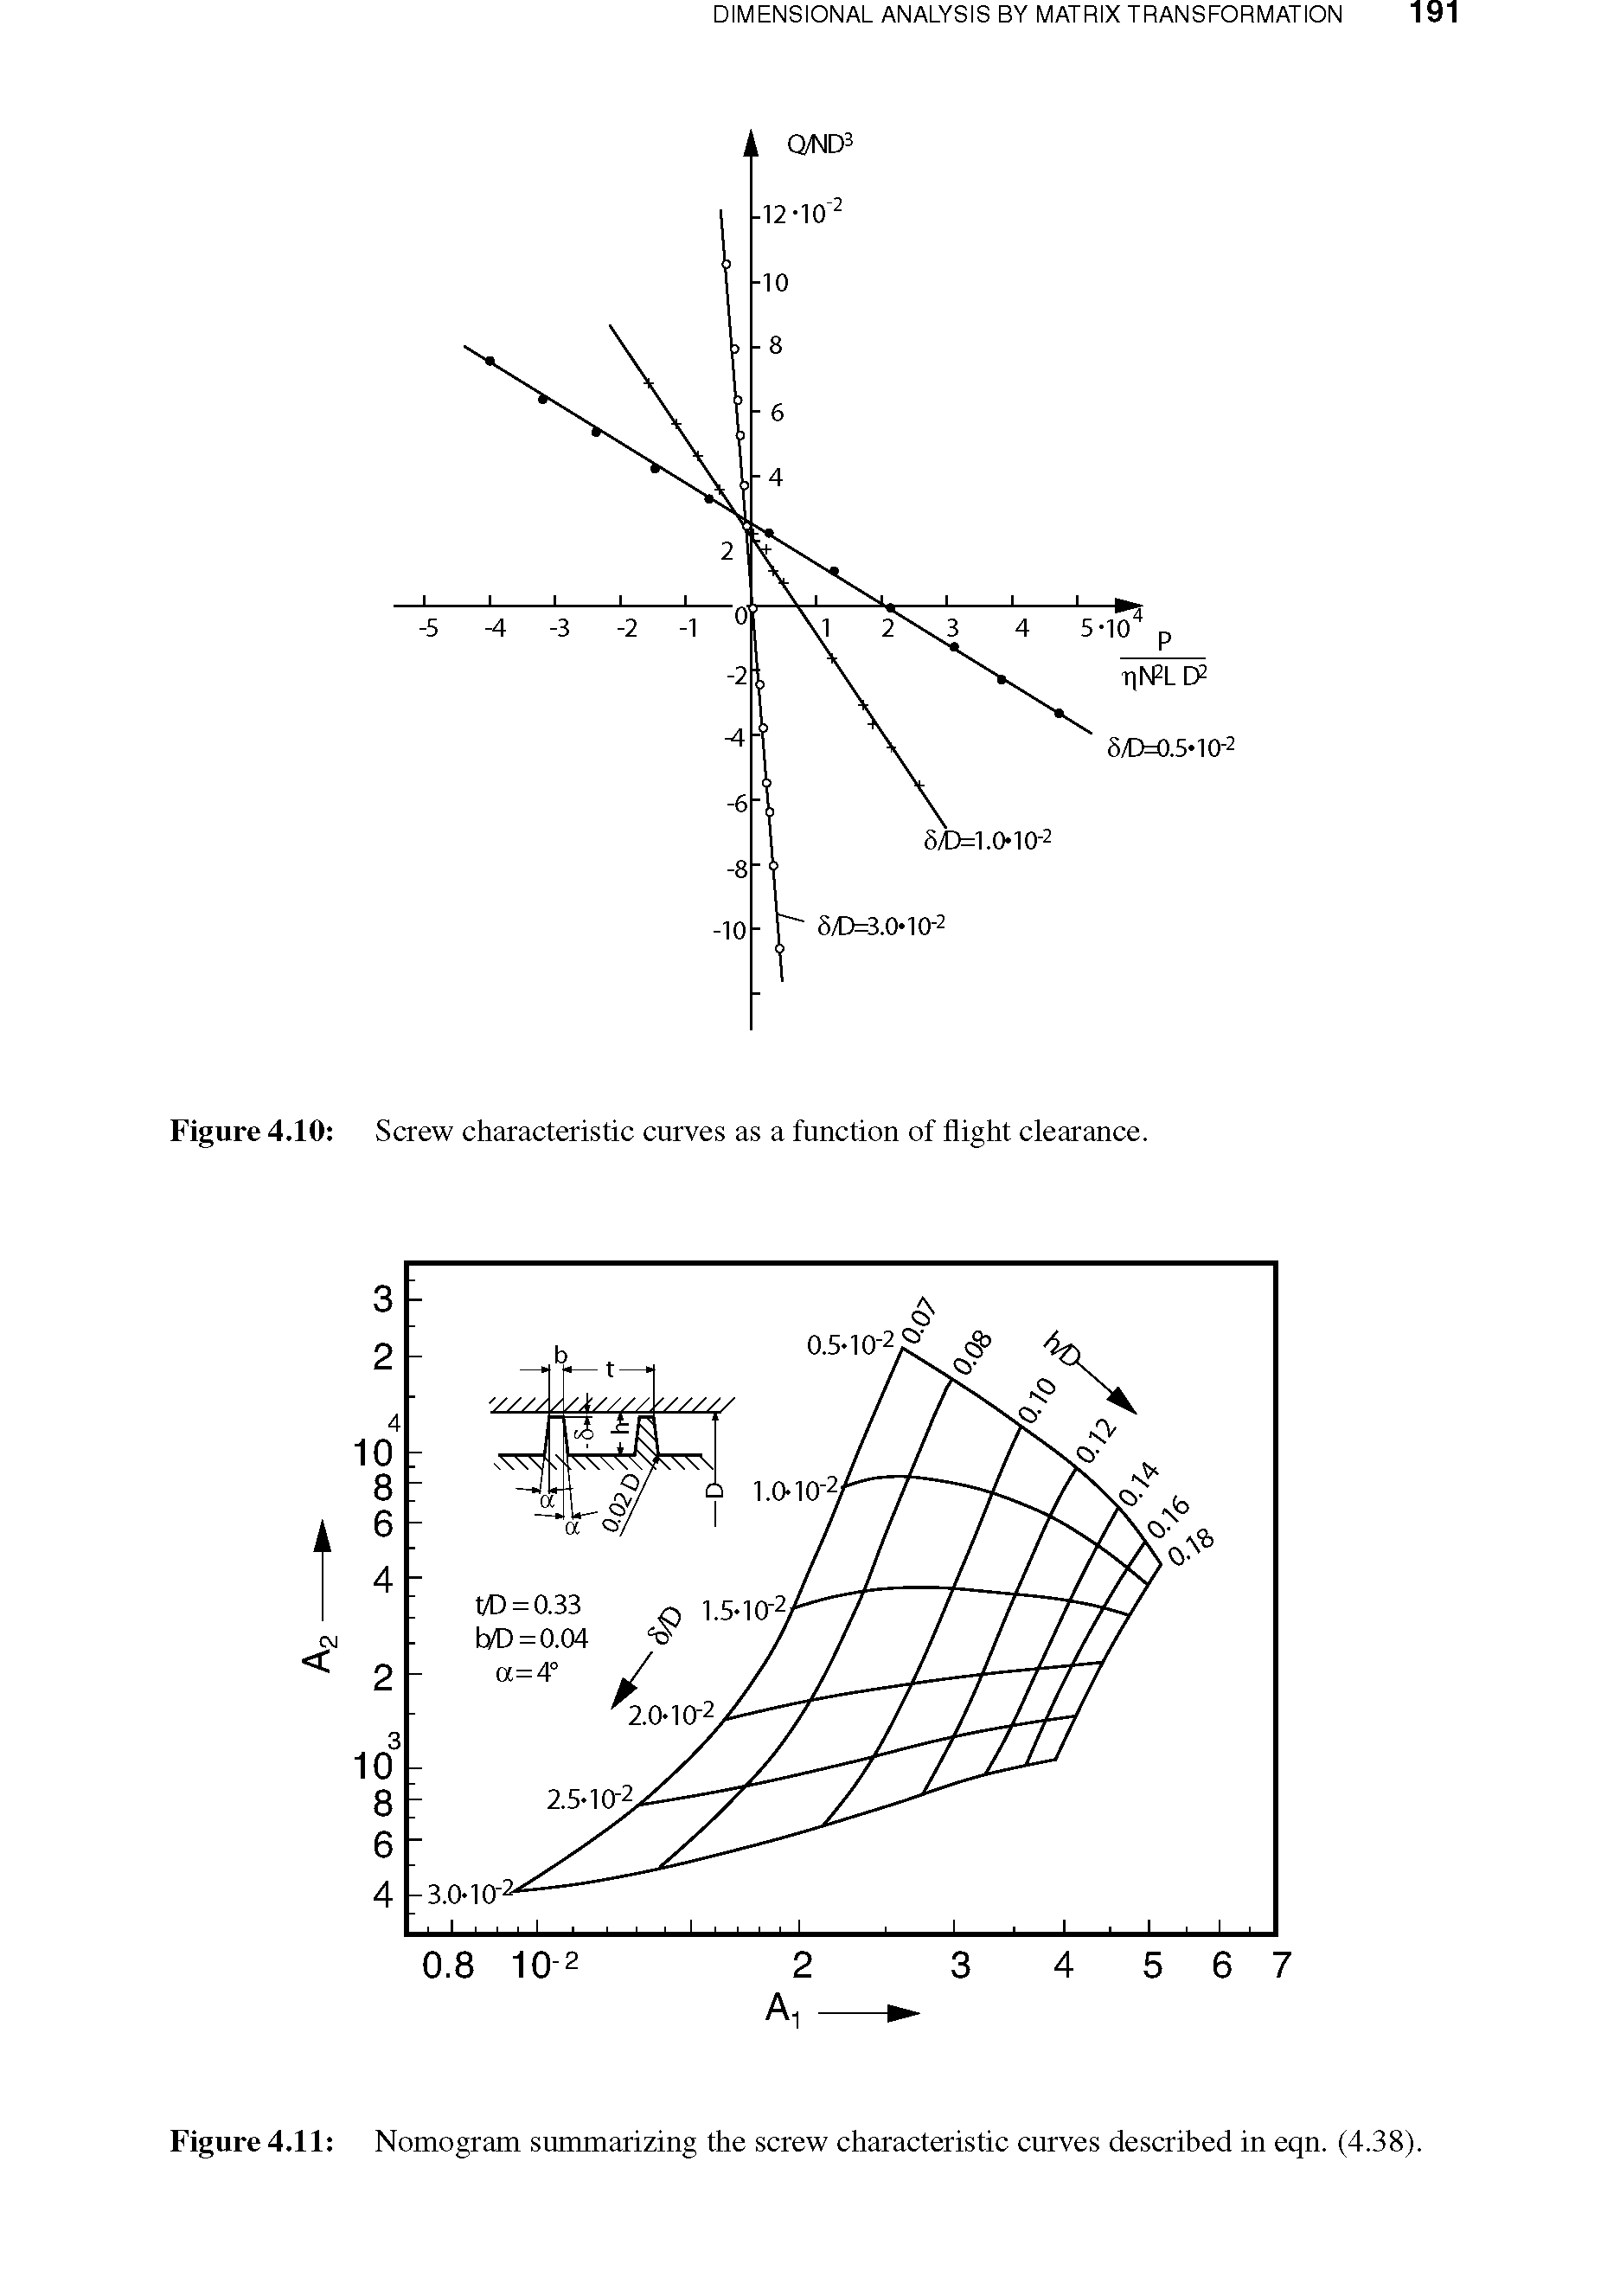 Figure 4.11 Nomogram summarizing the screw characteristic curves described in eqn. (4.38).